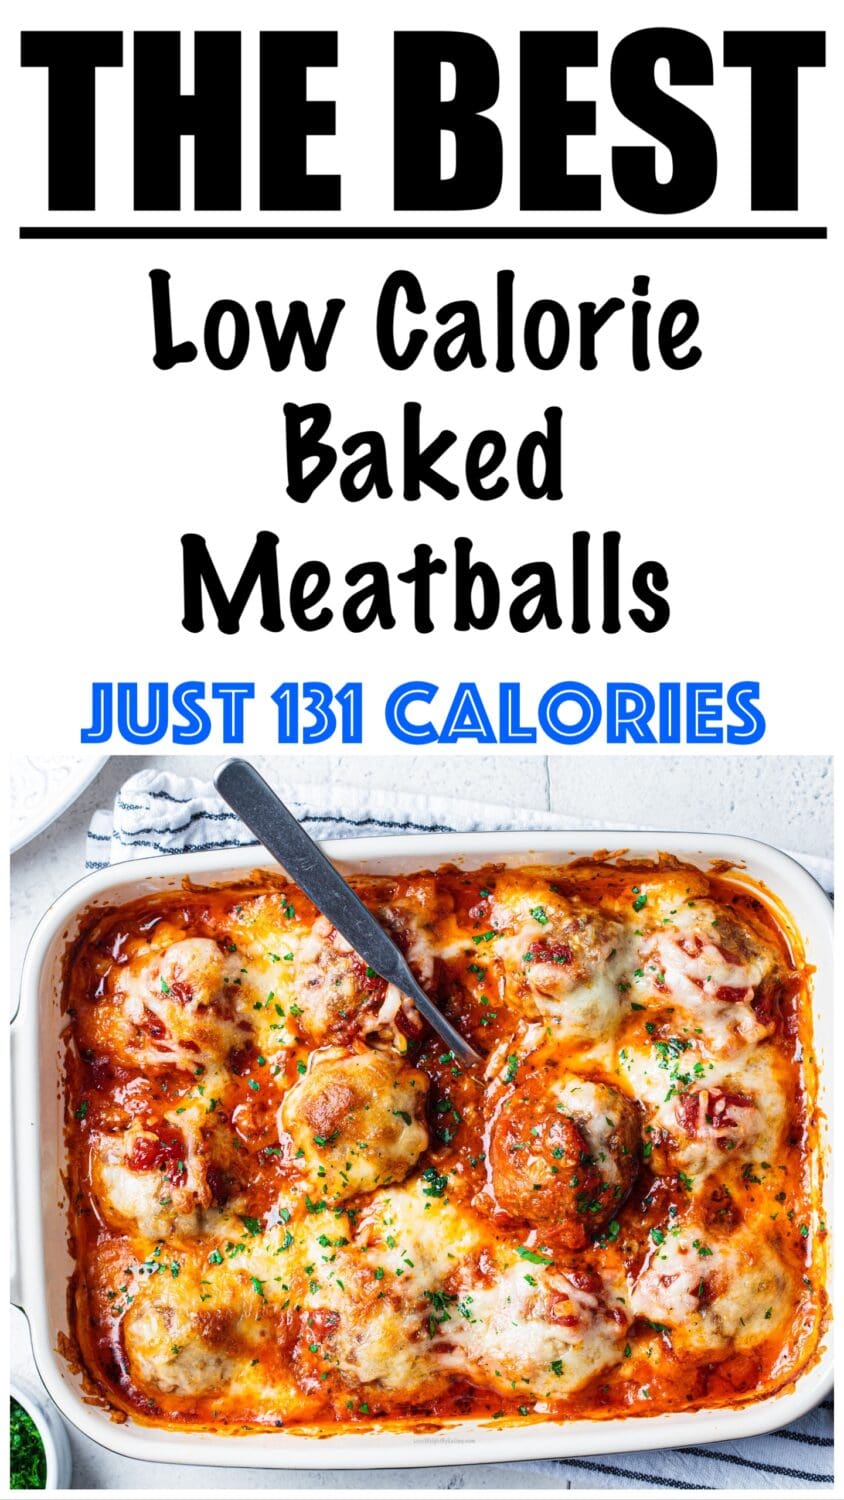 Low Calorie Baked Meatballs
